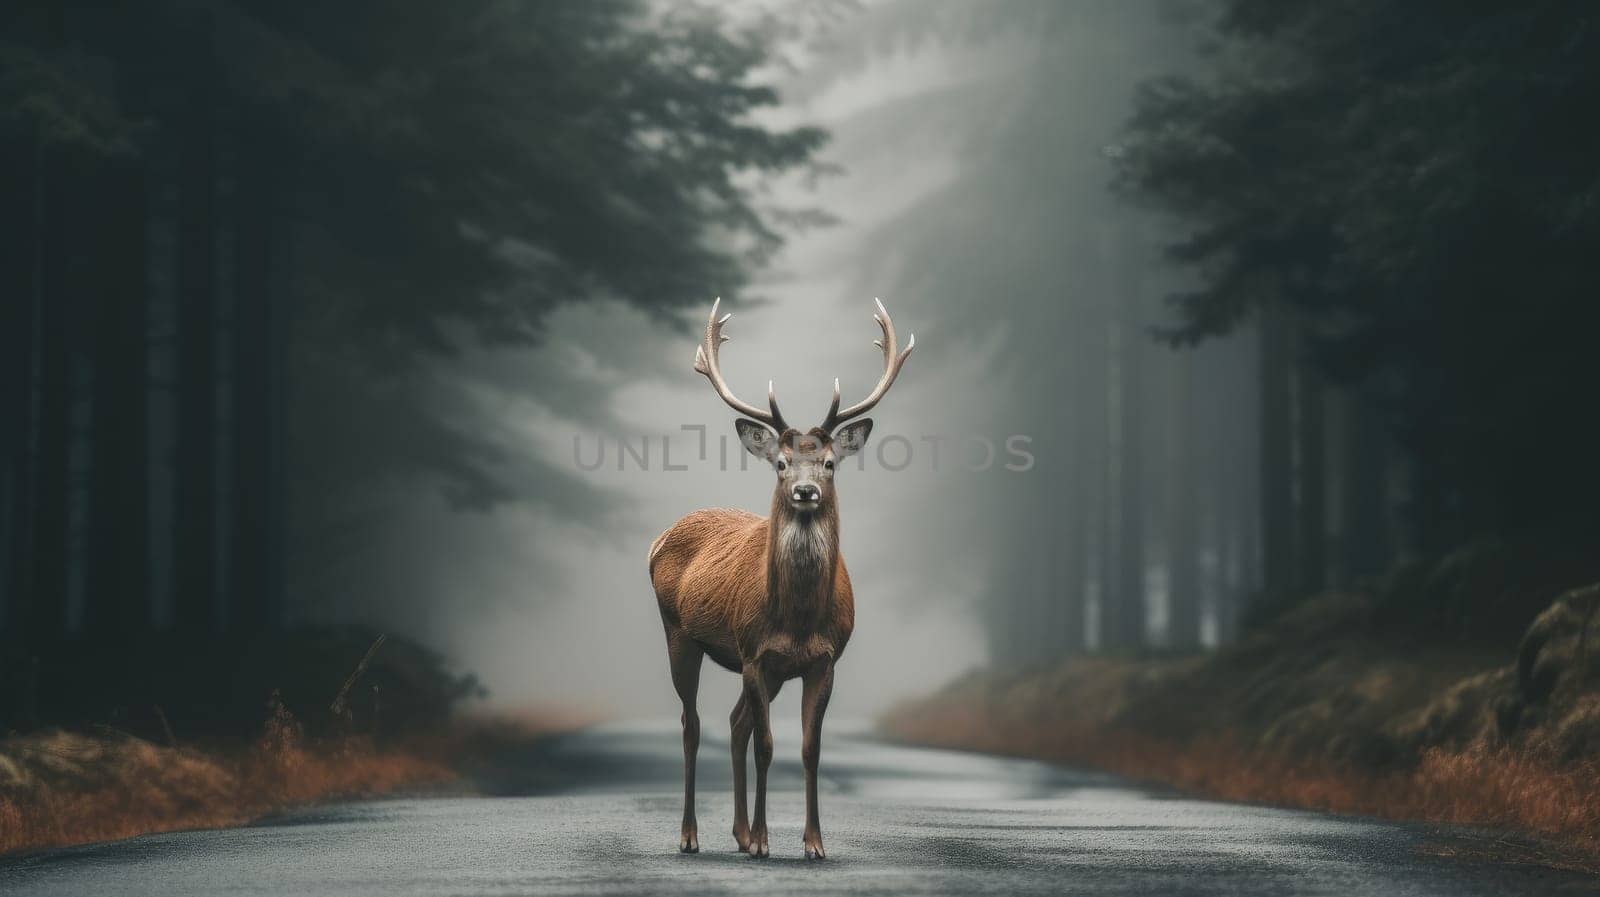 Roadside Encounter. Misty Morning with Deer Crossing, Transport Hazard in Foggy Forest Surrounding, Wildlife Caution. Morning Fog Encounter. Deer Crossing Warning on Road, Wildlife Hazards by ViShark